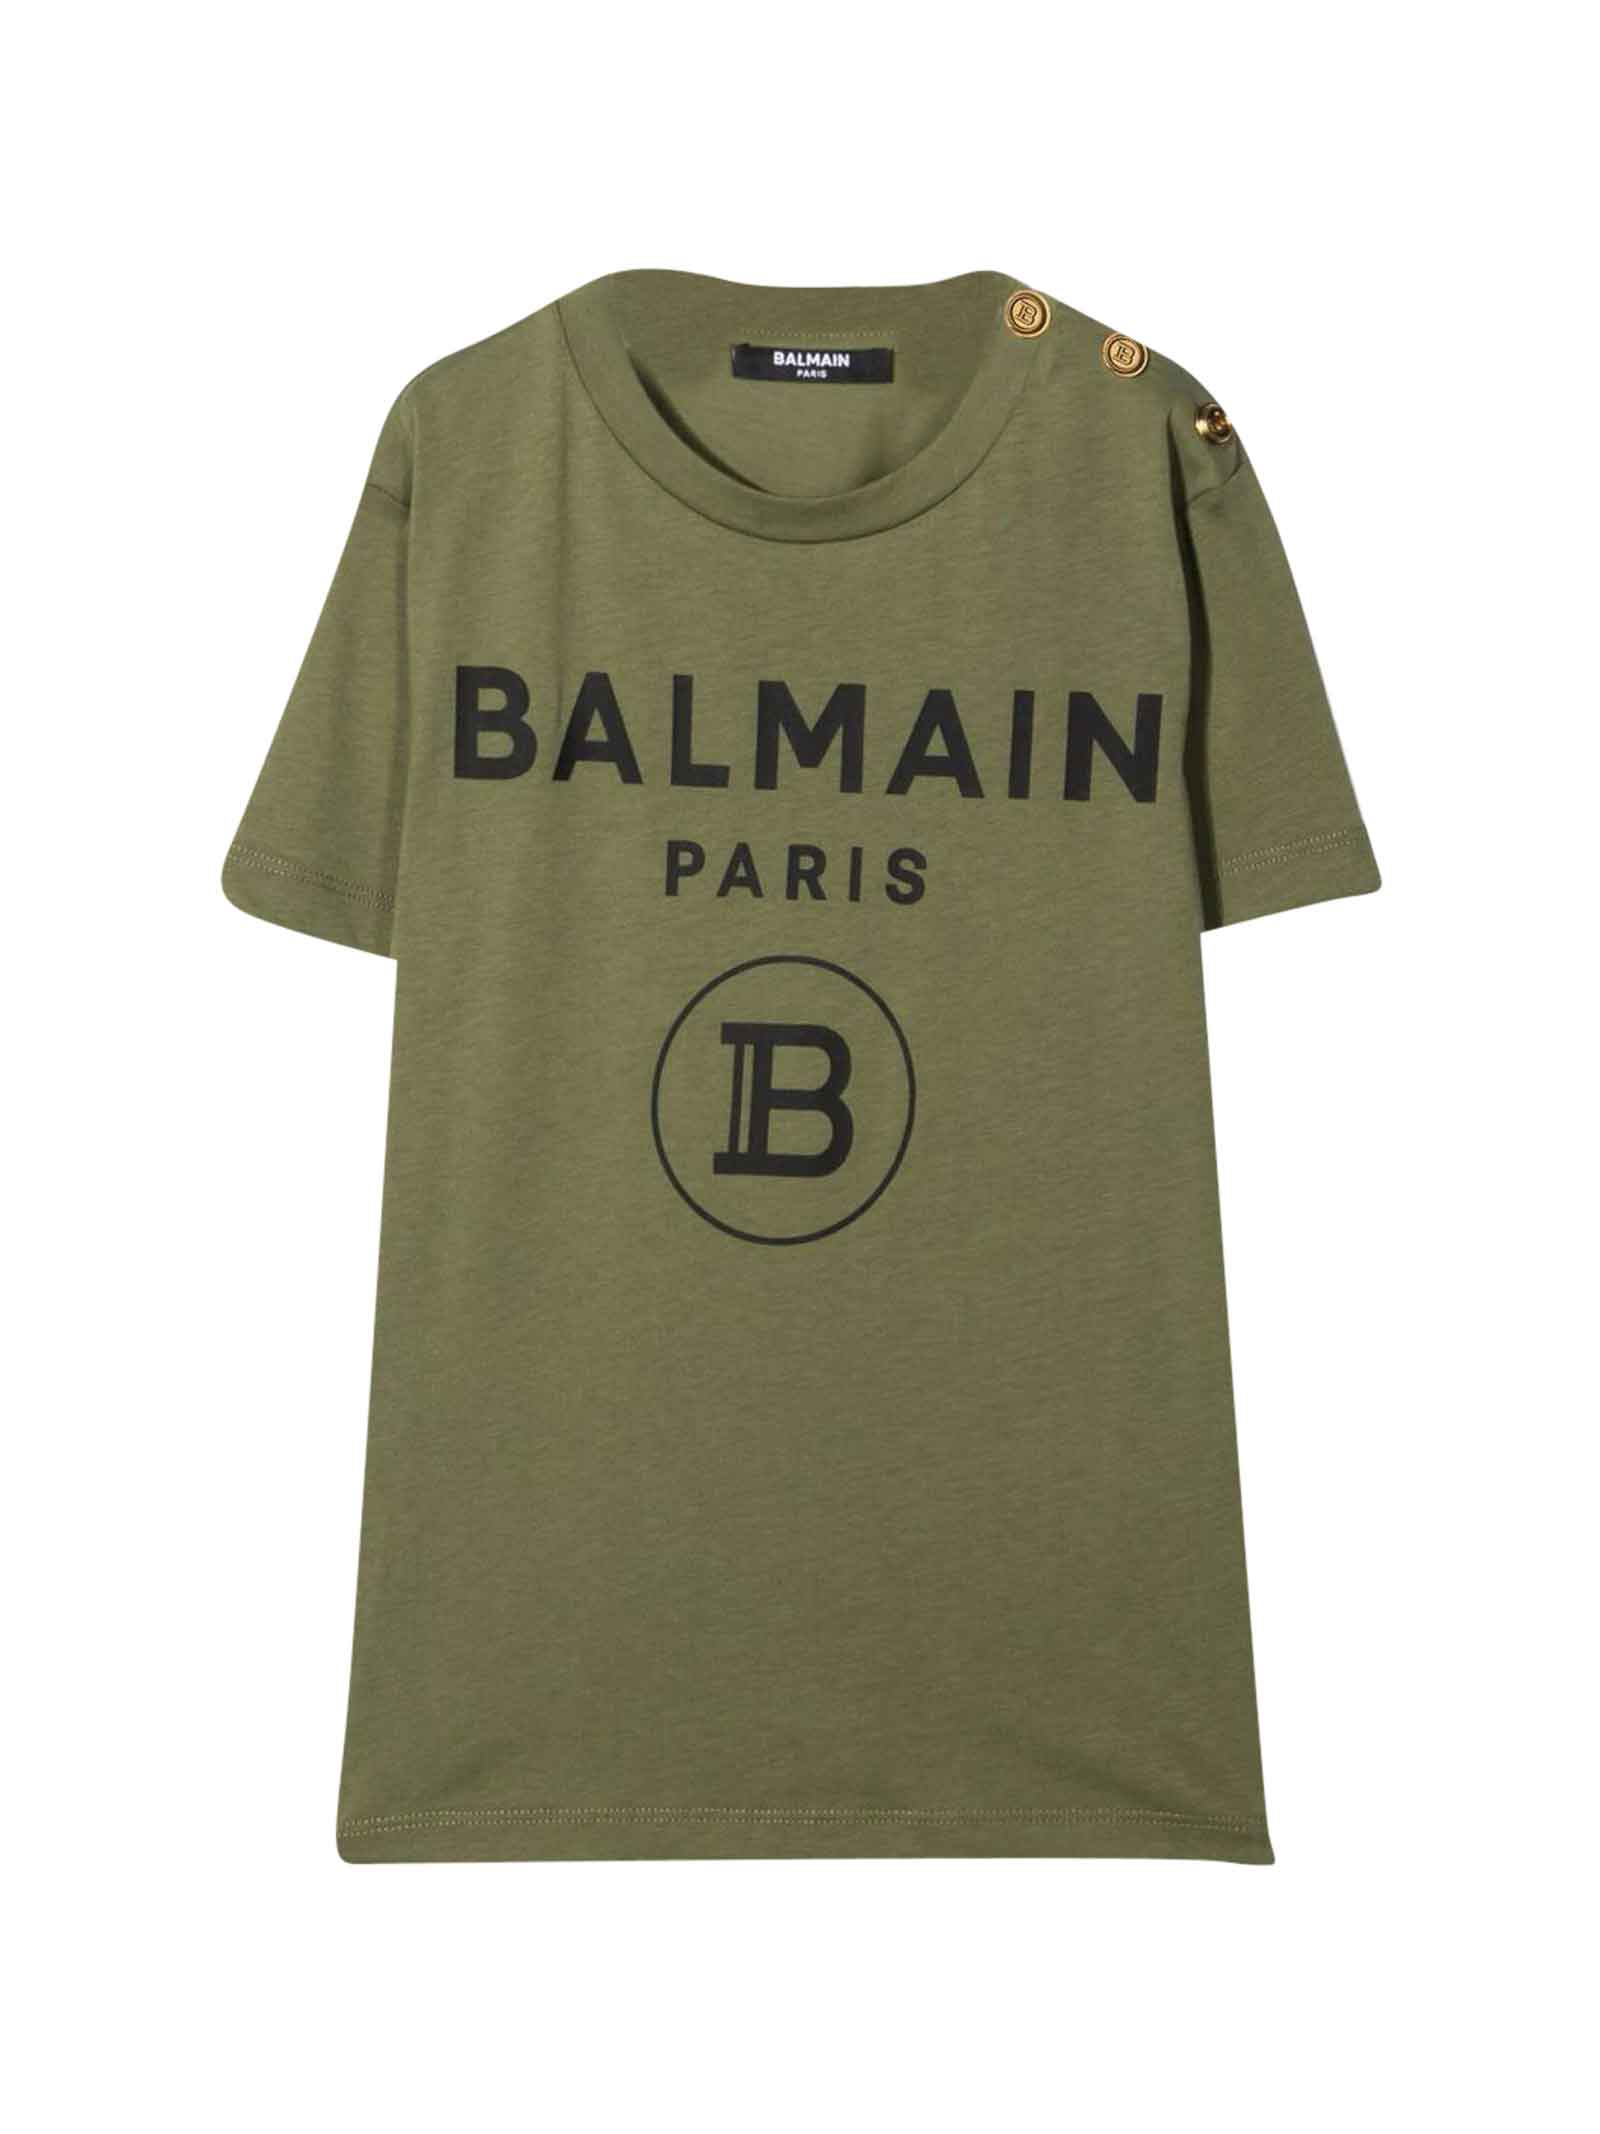 Balmain Unisex Military Green T-shirt